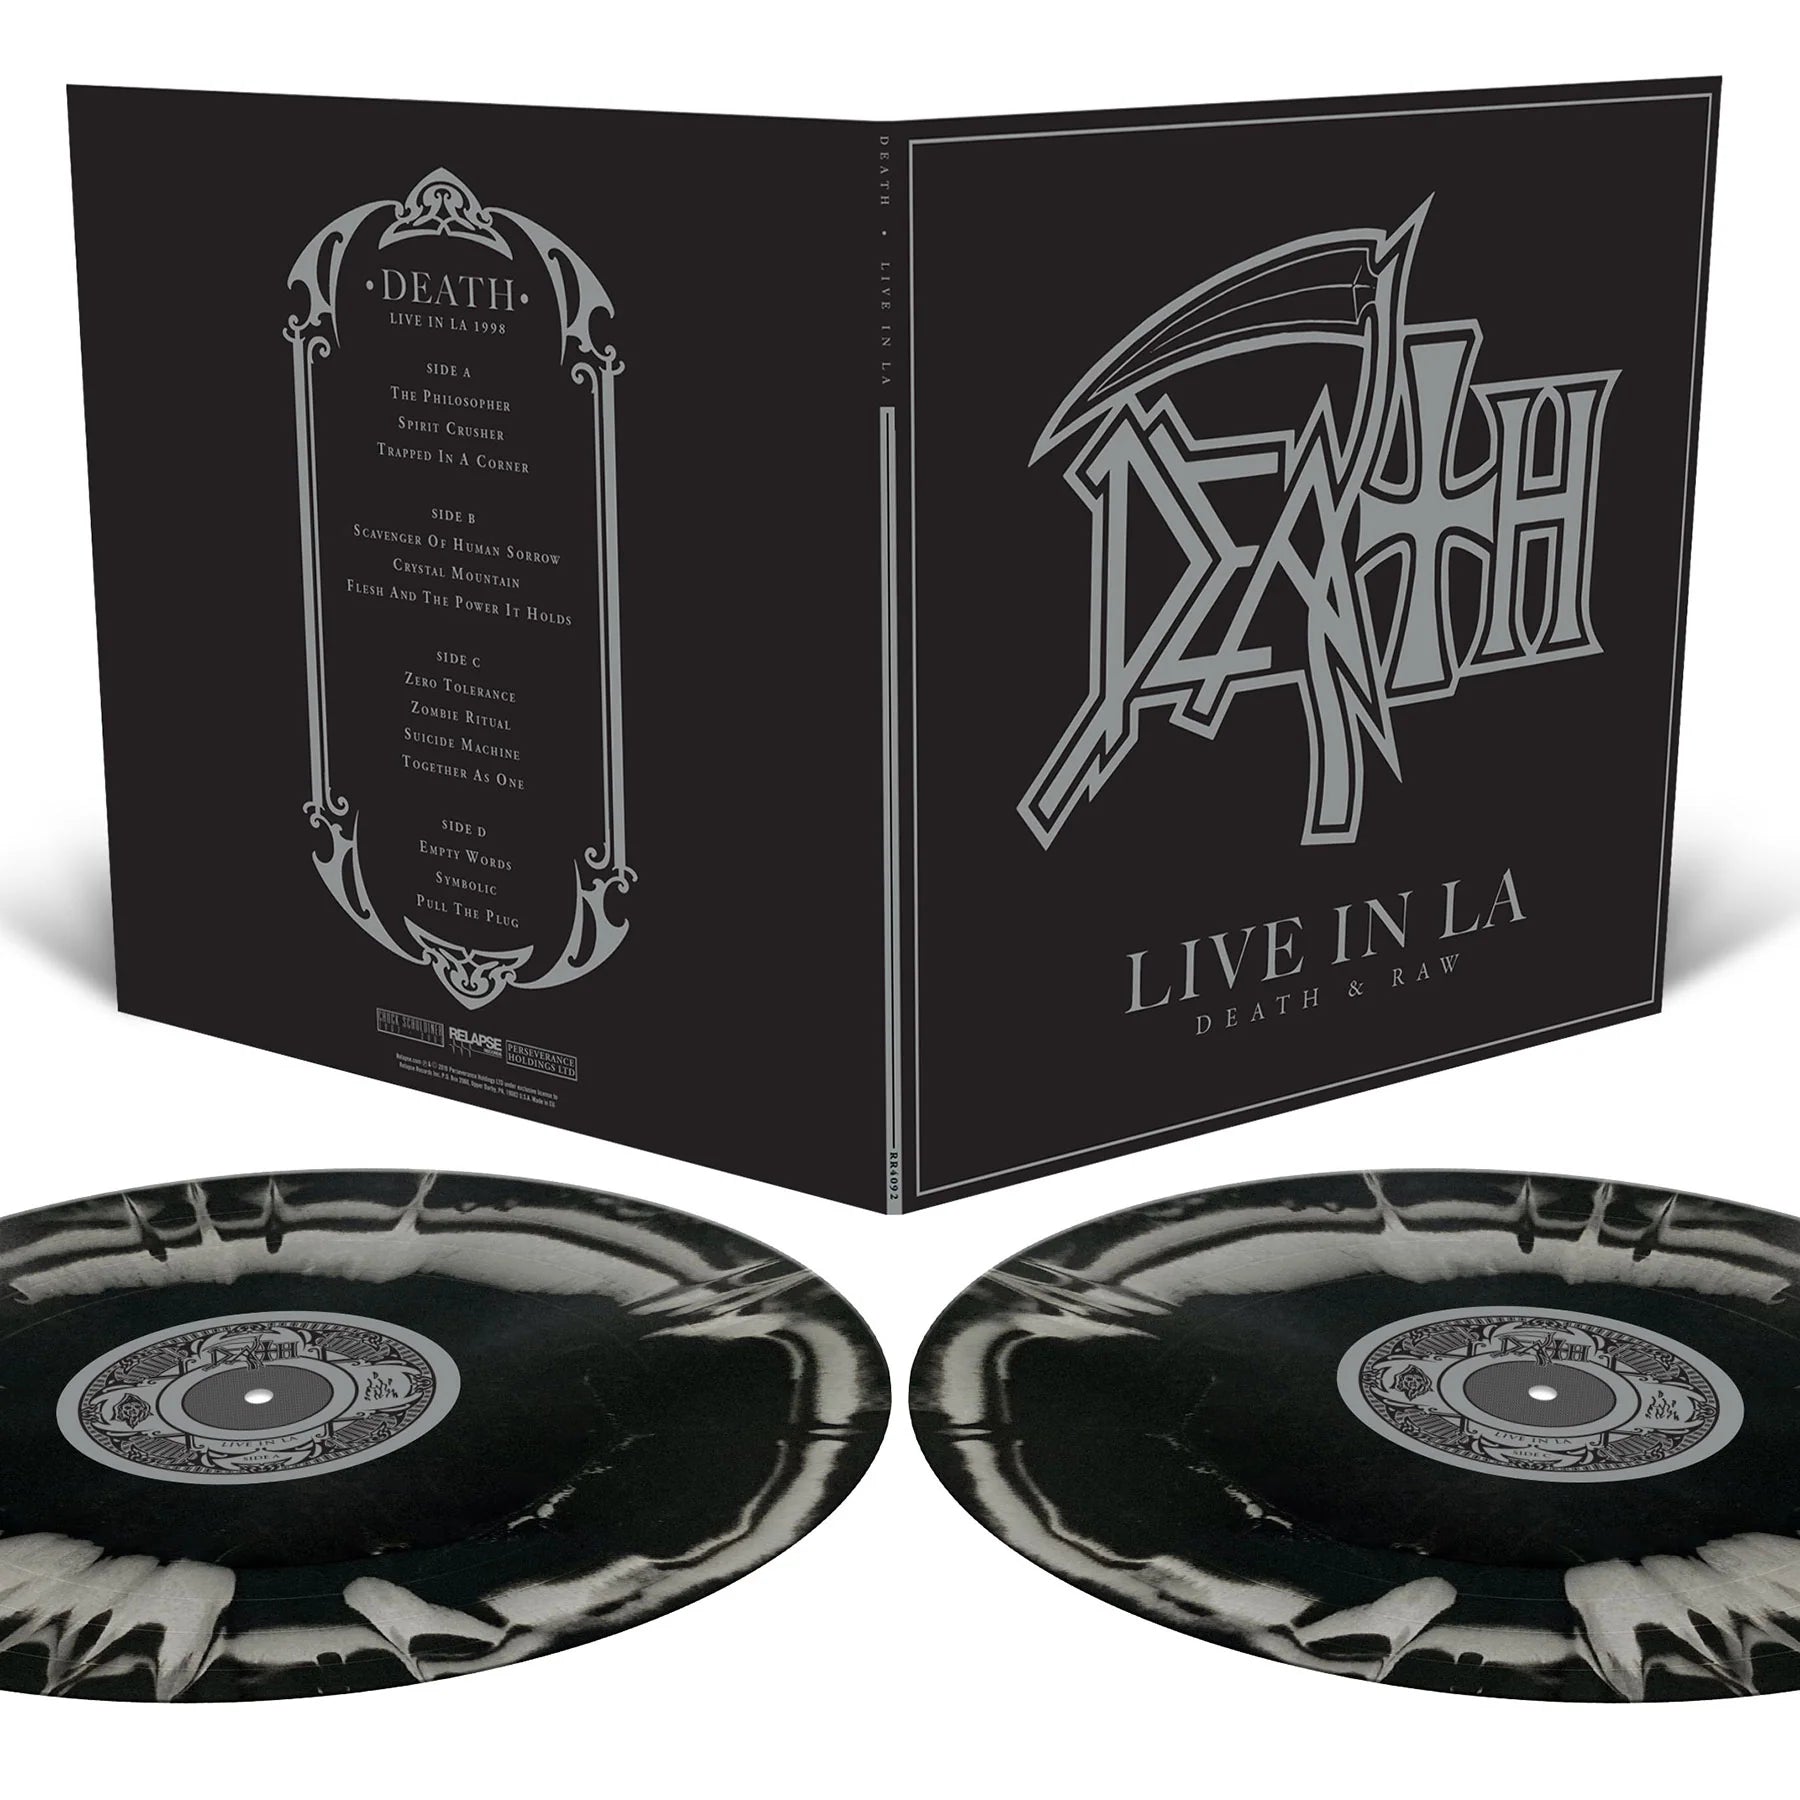 Death ‎– Live In L.A. (Death & Raw) 2LP LTD Custom Merge with Splatter Edition